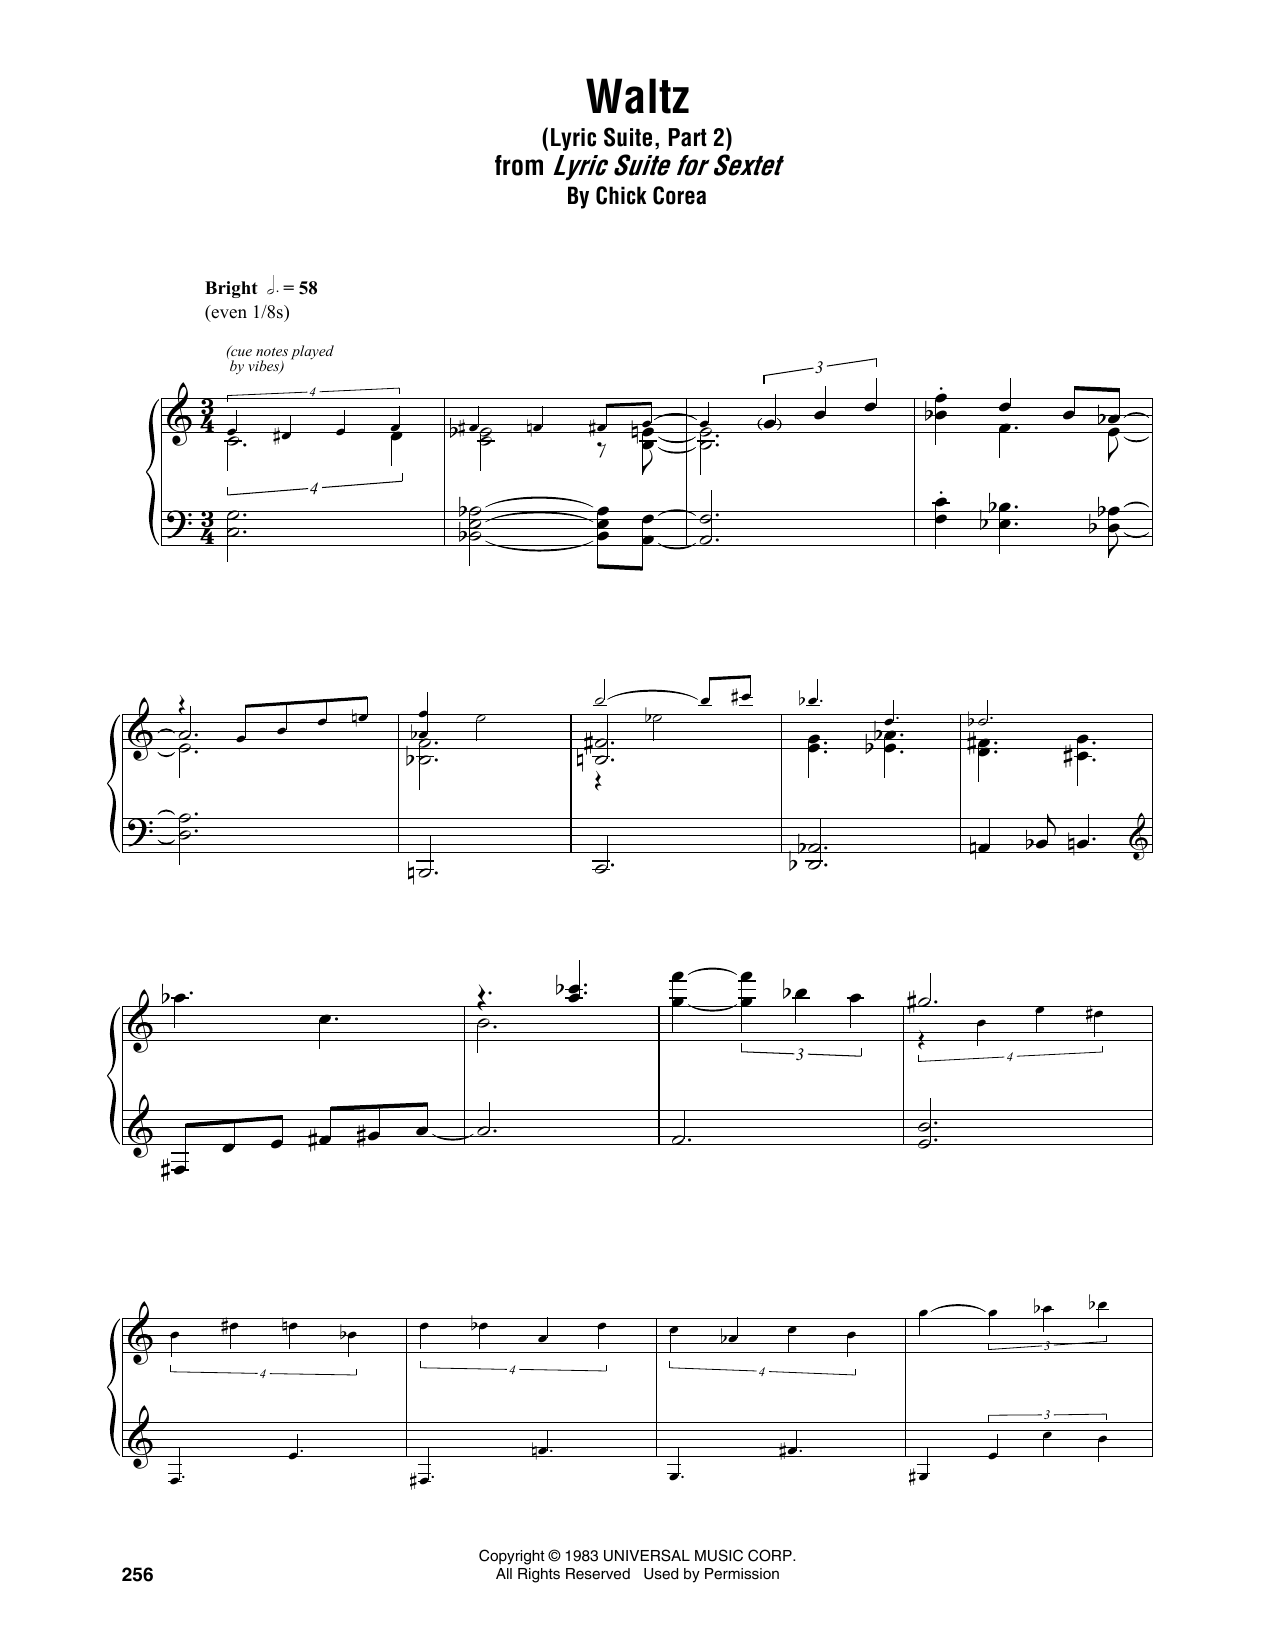 Chick Corea Waltz (Lyric Suite, Part 2) Sheet Music Notes & Chords for Piano Transcription - Download or Print PDF